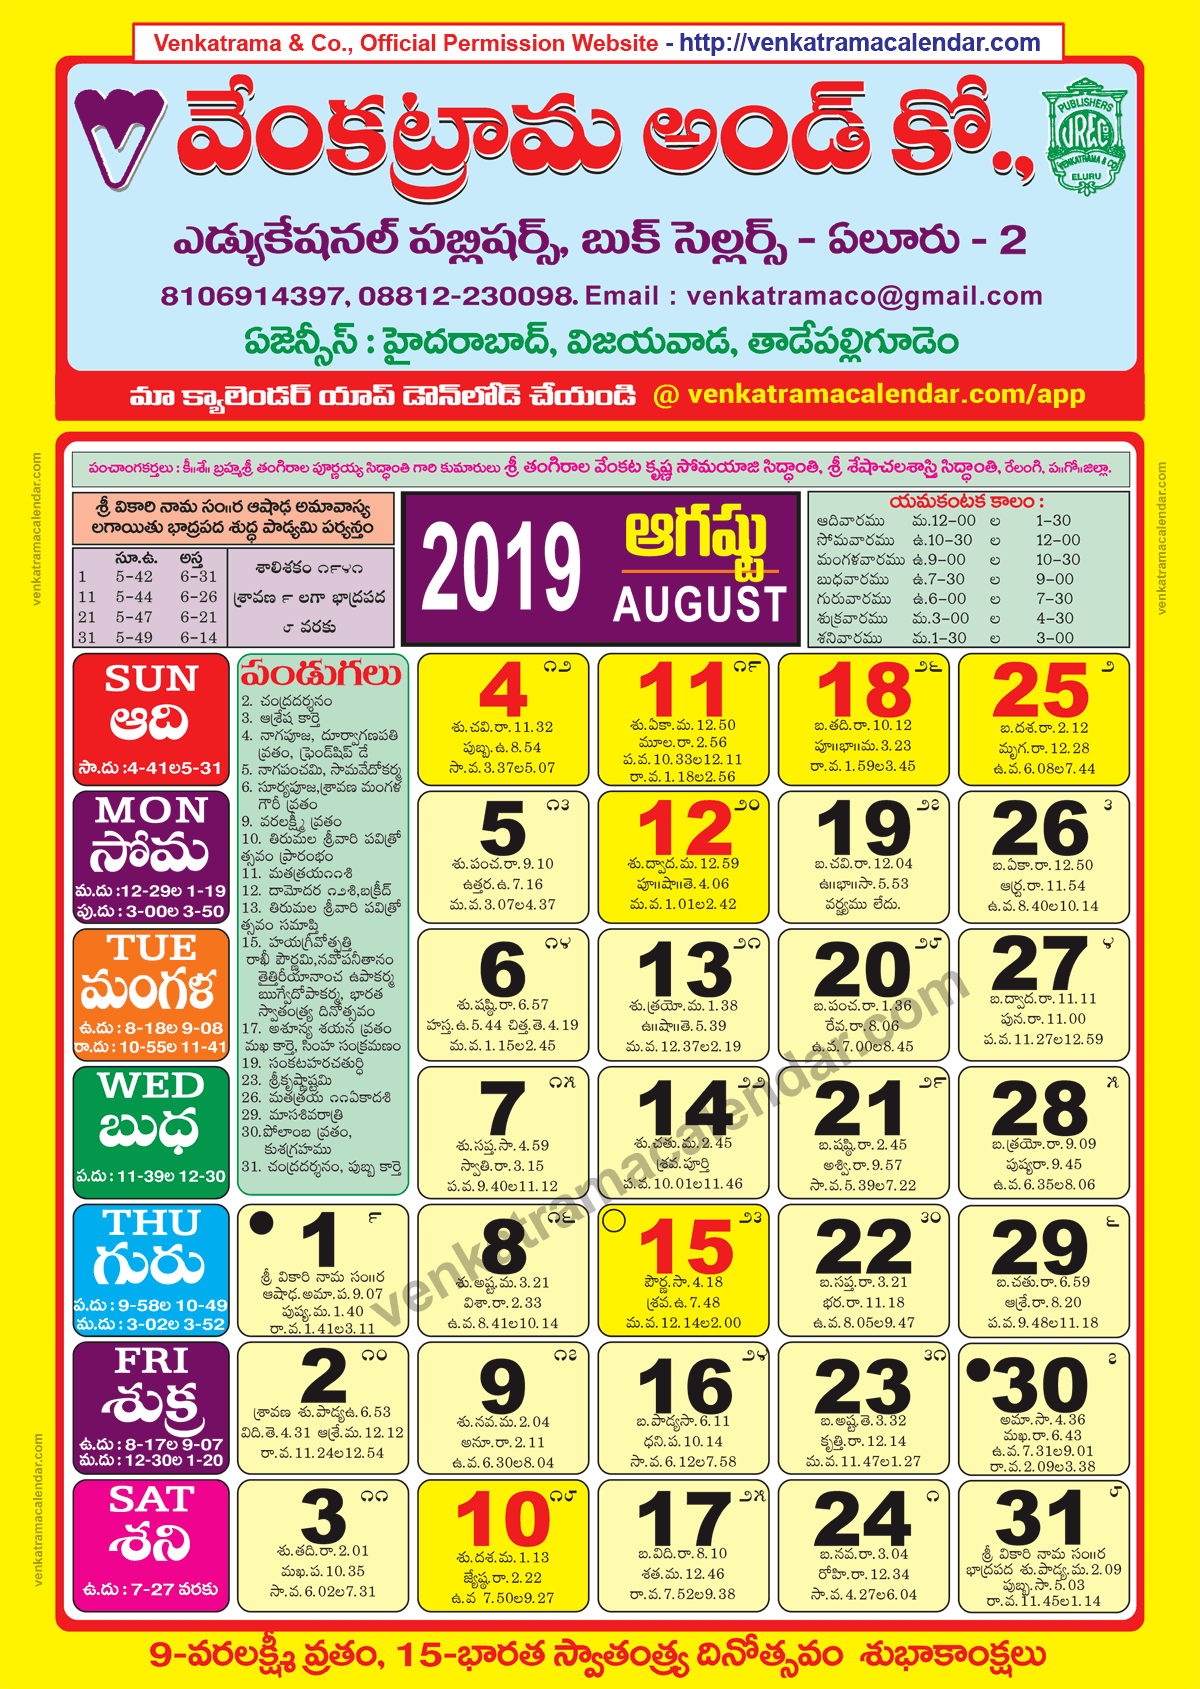 venkatrama-co-2019-august-telugu-calendar-colour